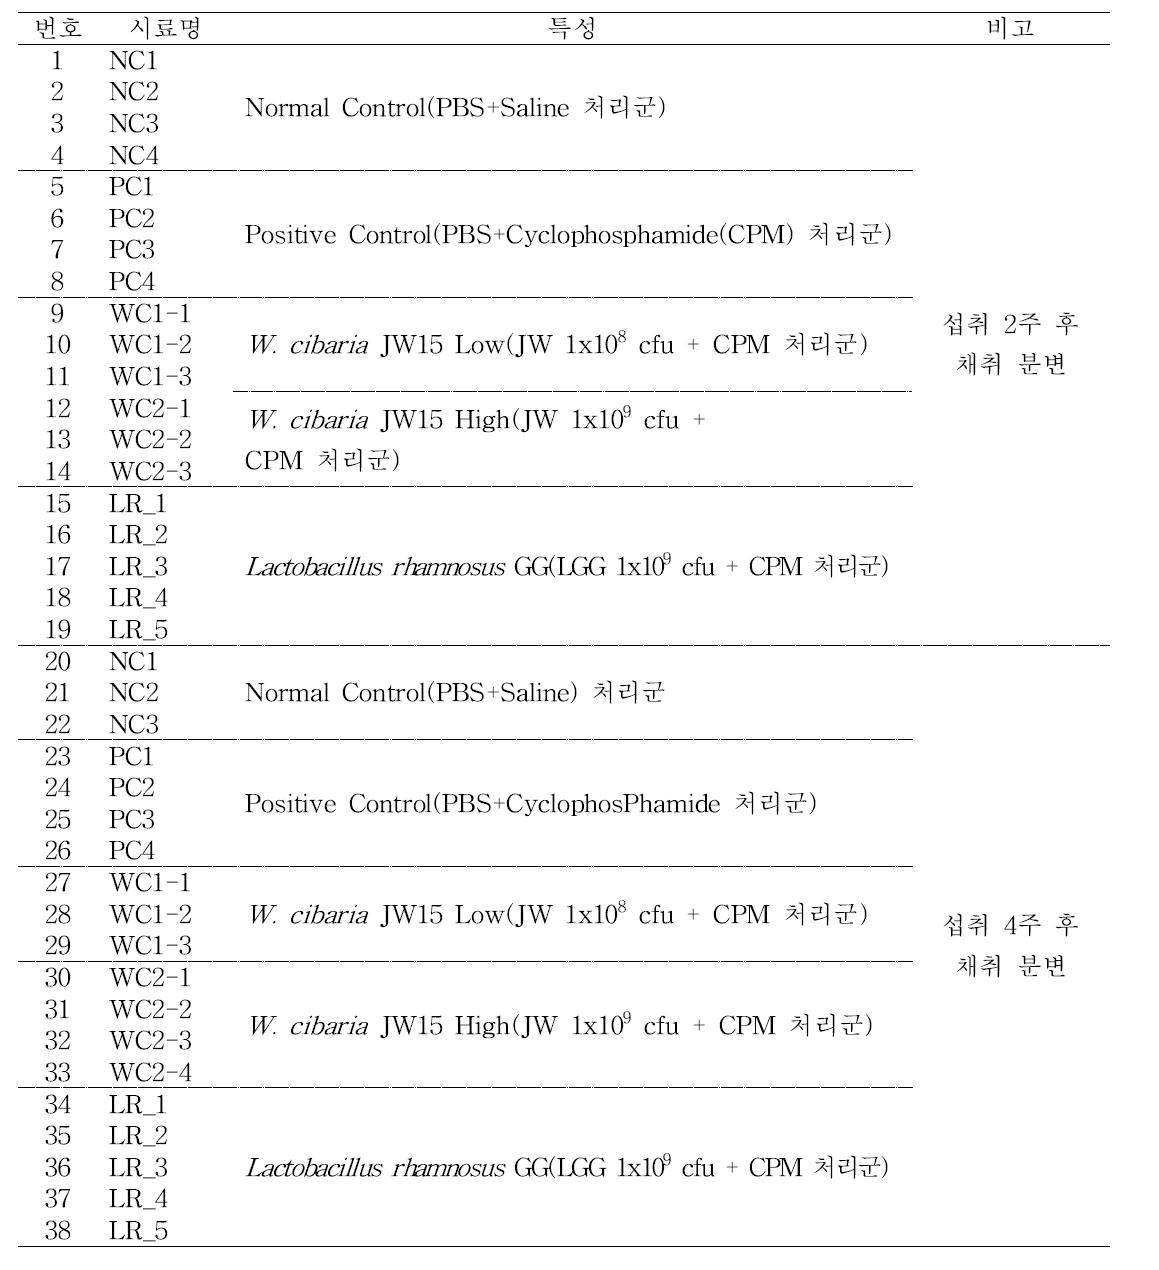 Used sample list for distribution of mice intestinal microbiome